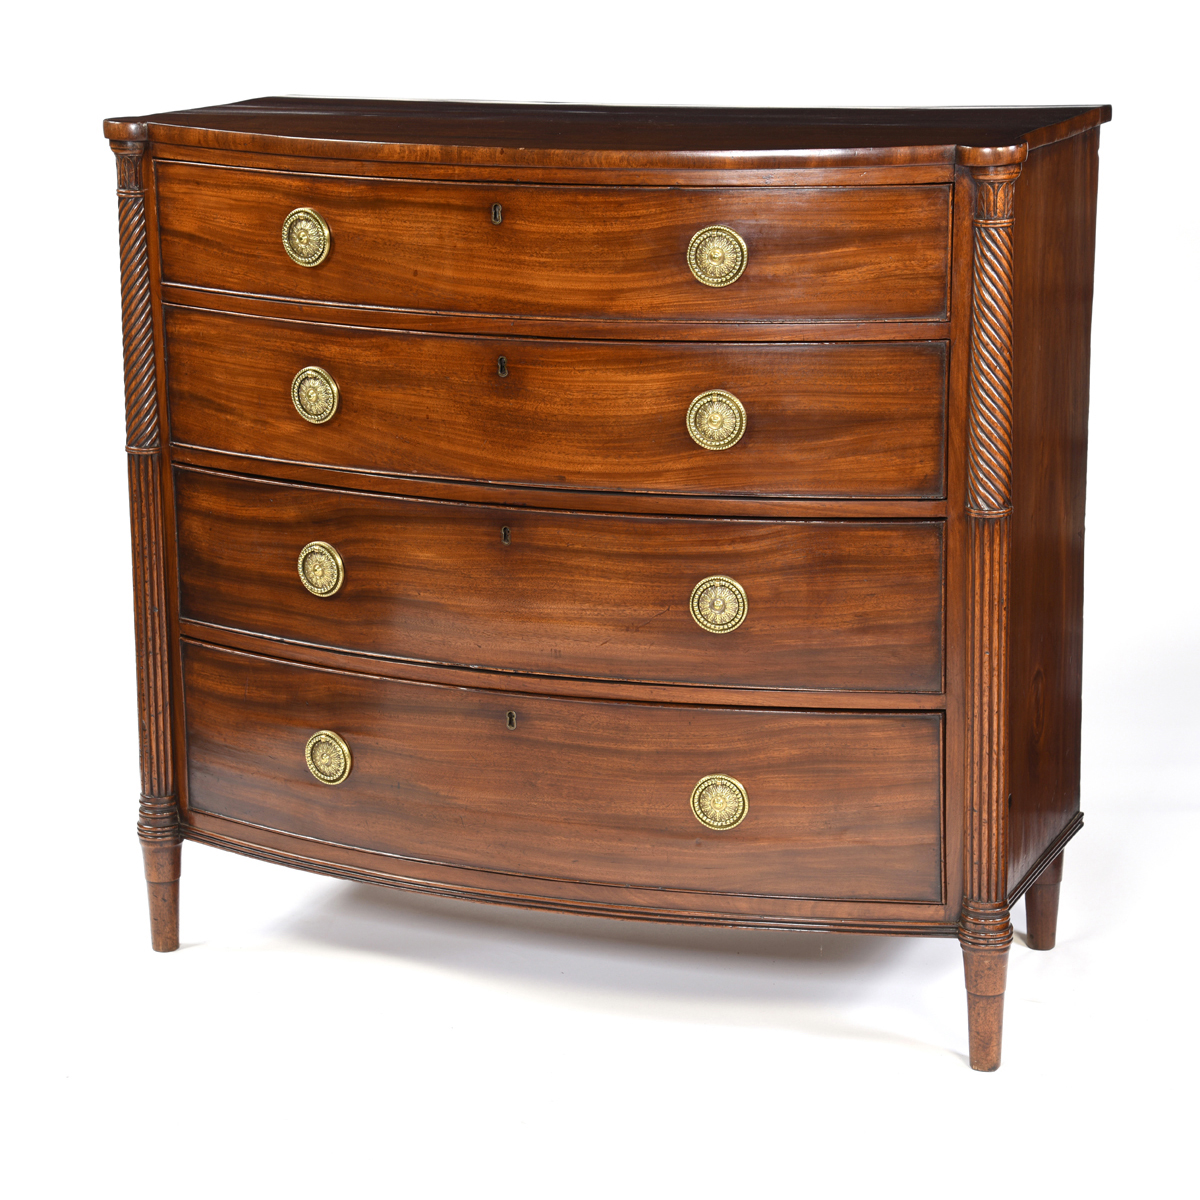 es239009-antique-english-mahogany-chest-1.jpg.jpg